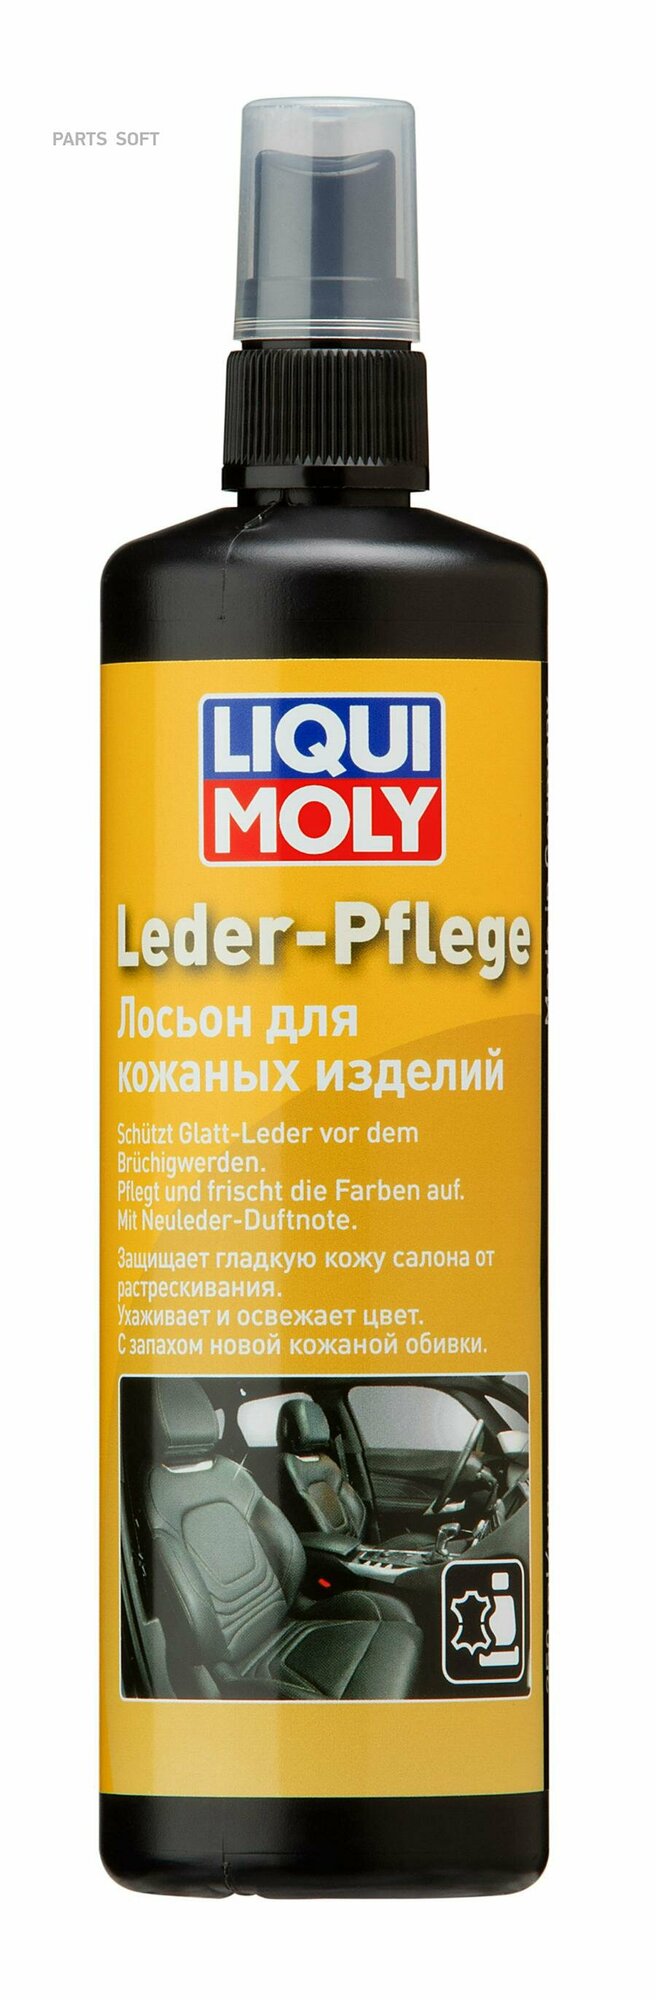 Средство д/ухода за кожей liqui moly (0,25л) 1554/7631